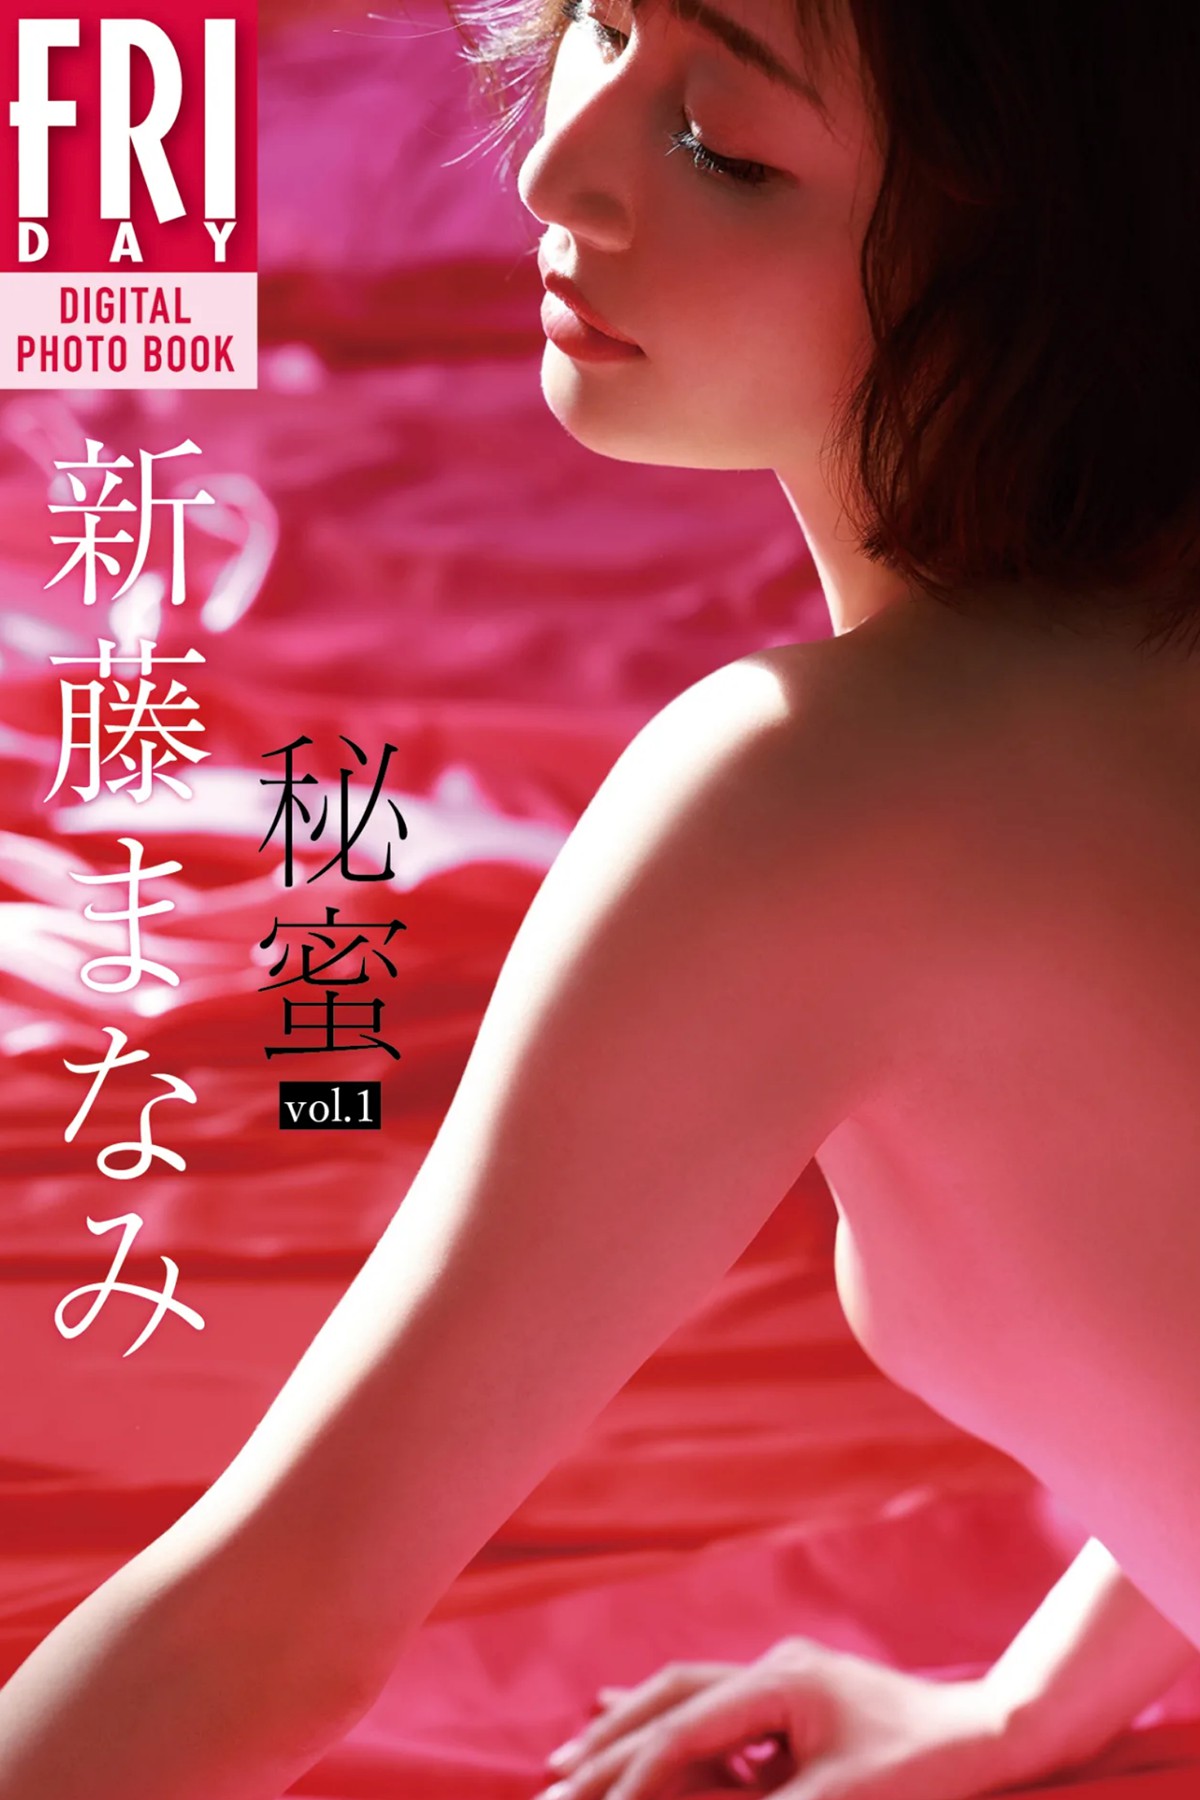 FRIDAY Digital Photo Manami Shindo 新藤まなみ – Secret Honey Vol.1 Complete Edition